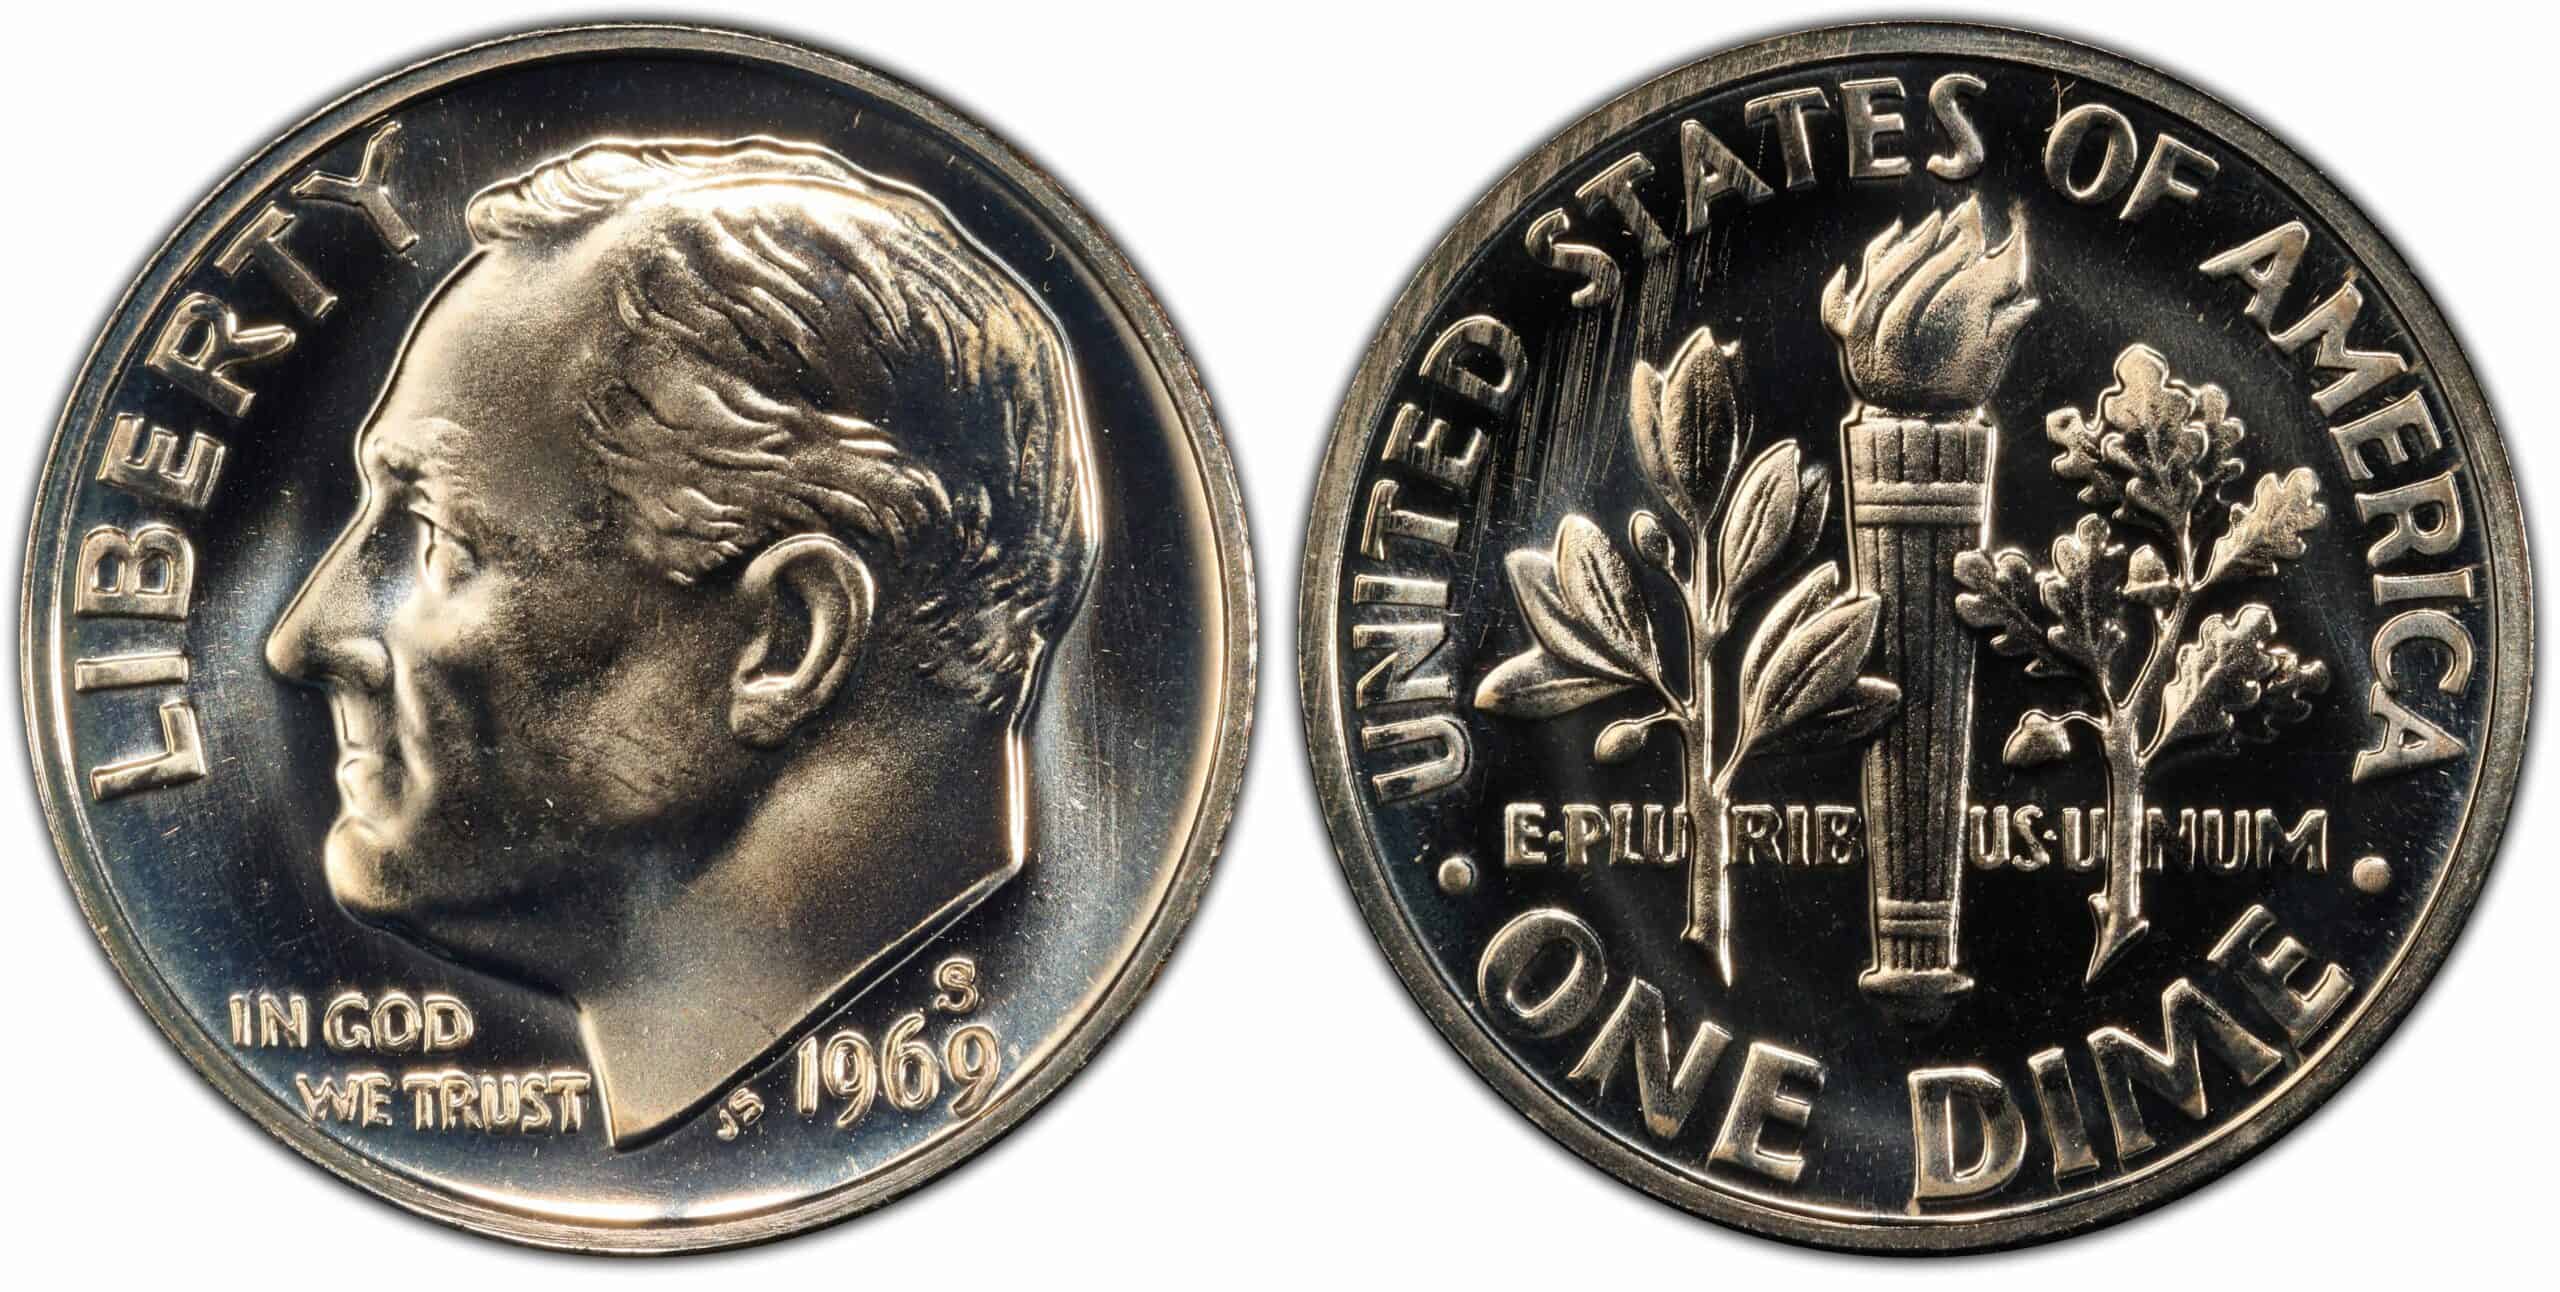 1969 S Roosevelt dime (proof) Value